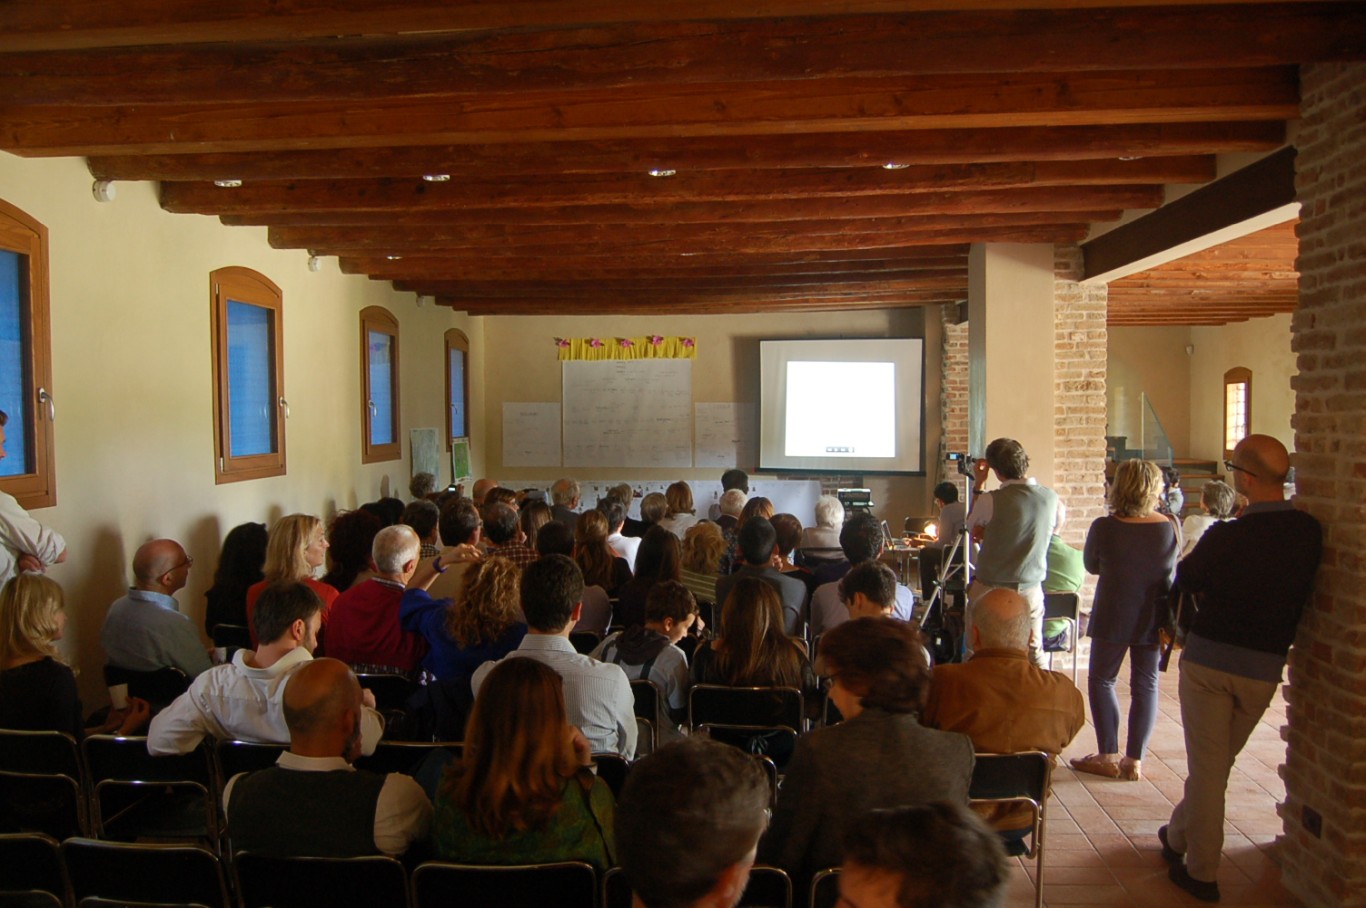 Sale Conferenze Padova1